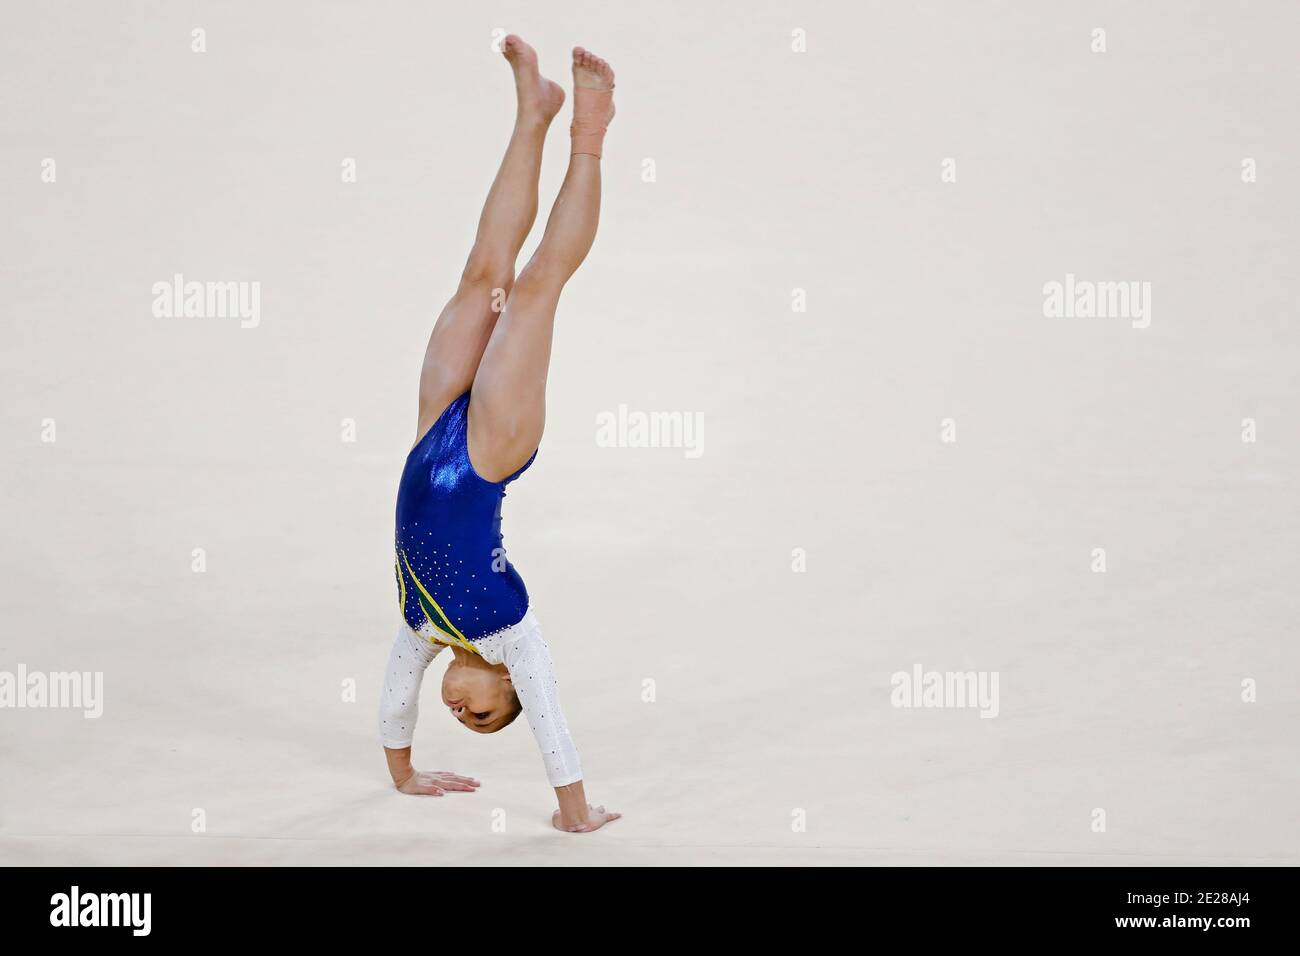 Flavia Saraiva at Rio 2016 Summer Olympic Games artistic gymnastics ...